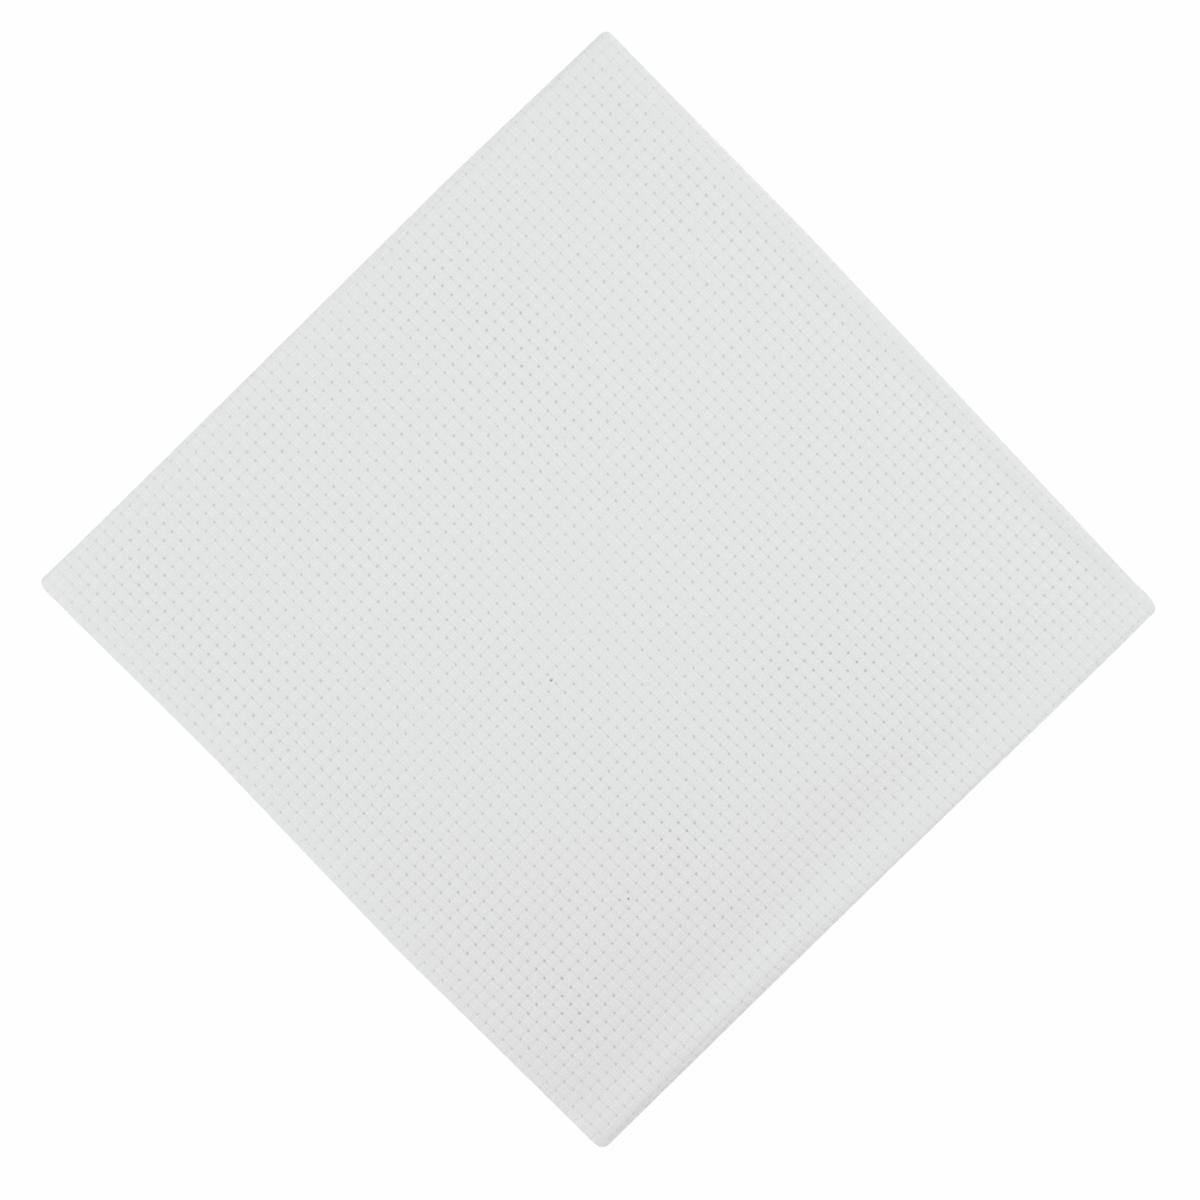 Trimits White Needlecraft Fabric - Aida 11 Count 45 x 30cm